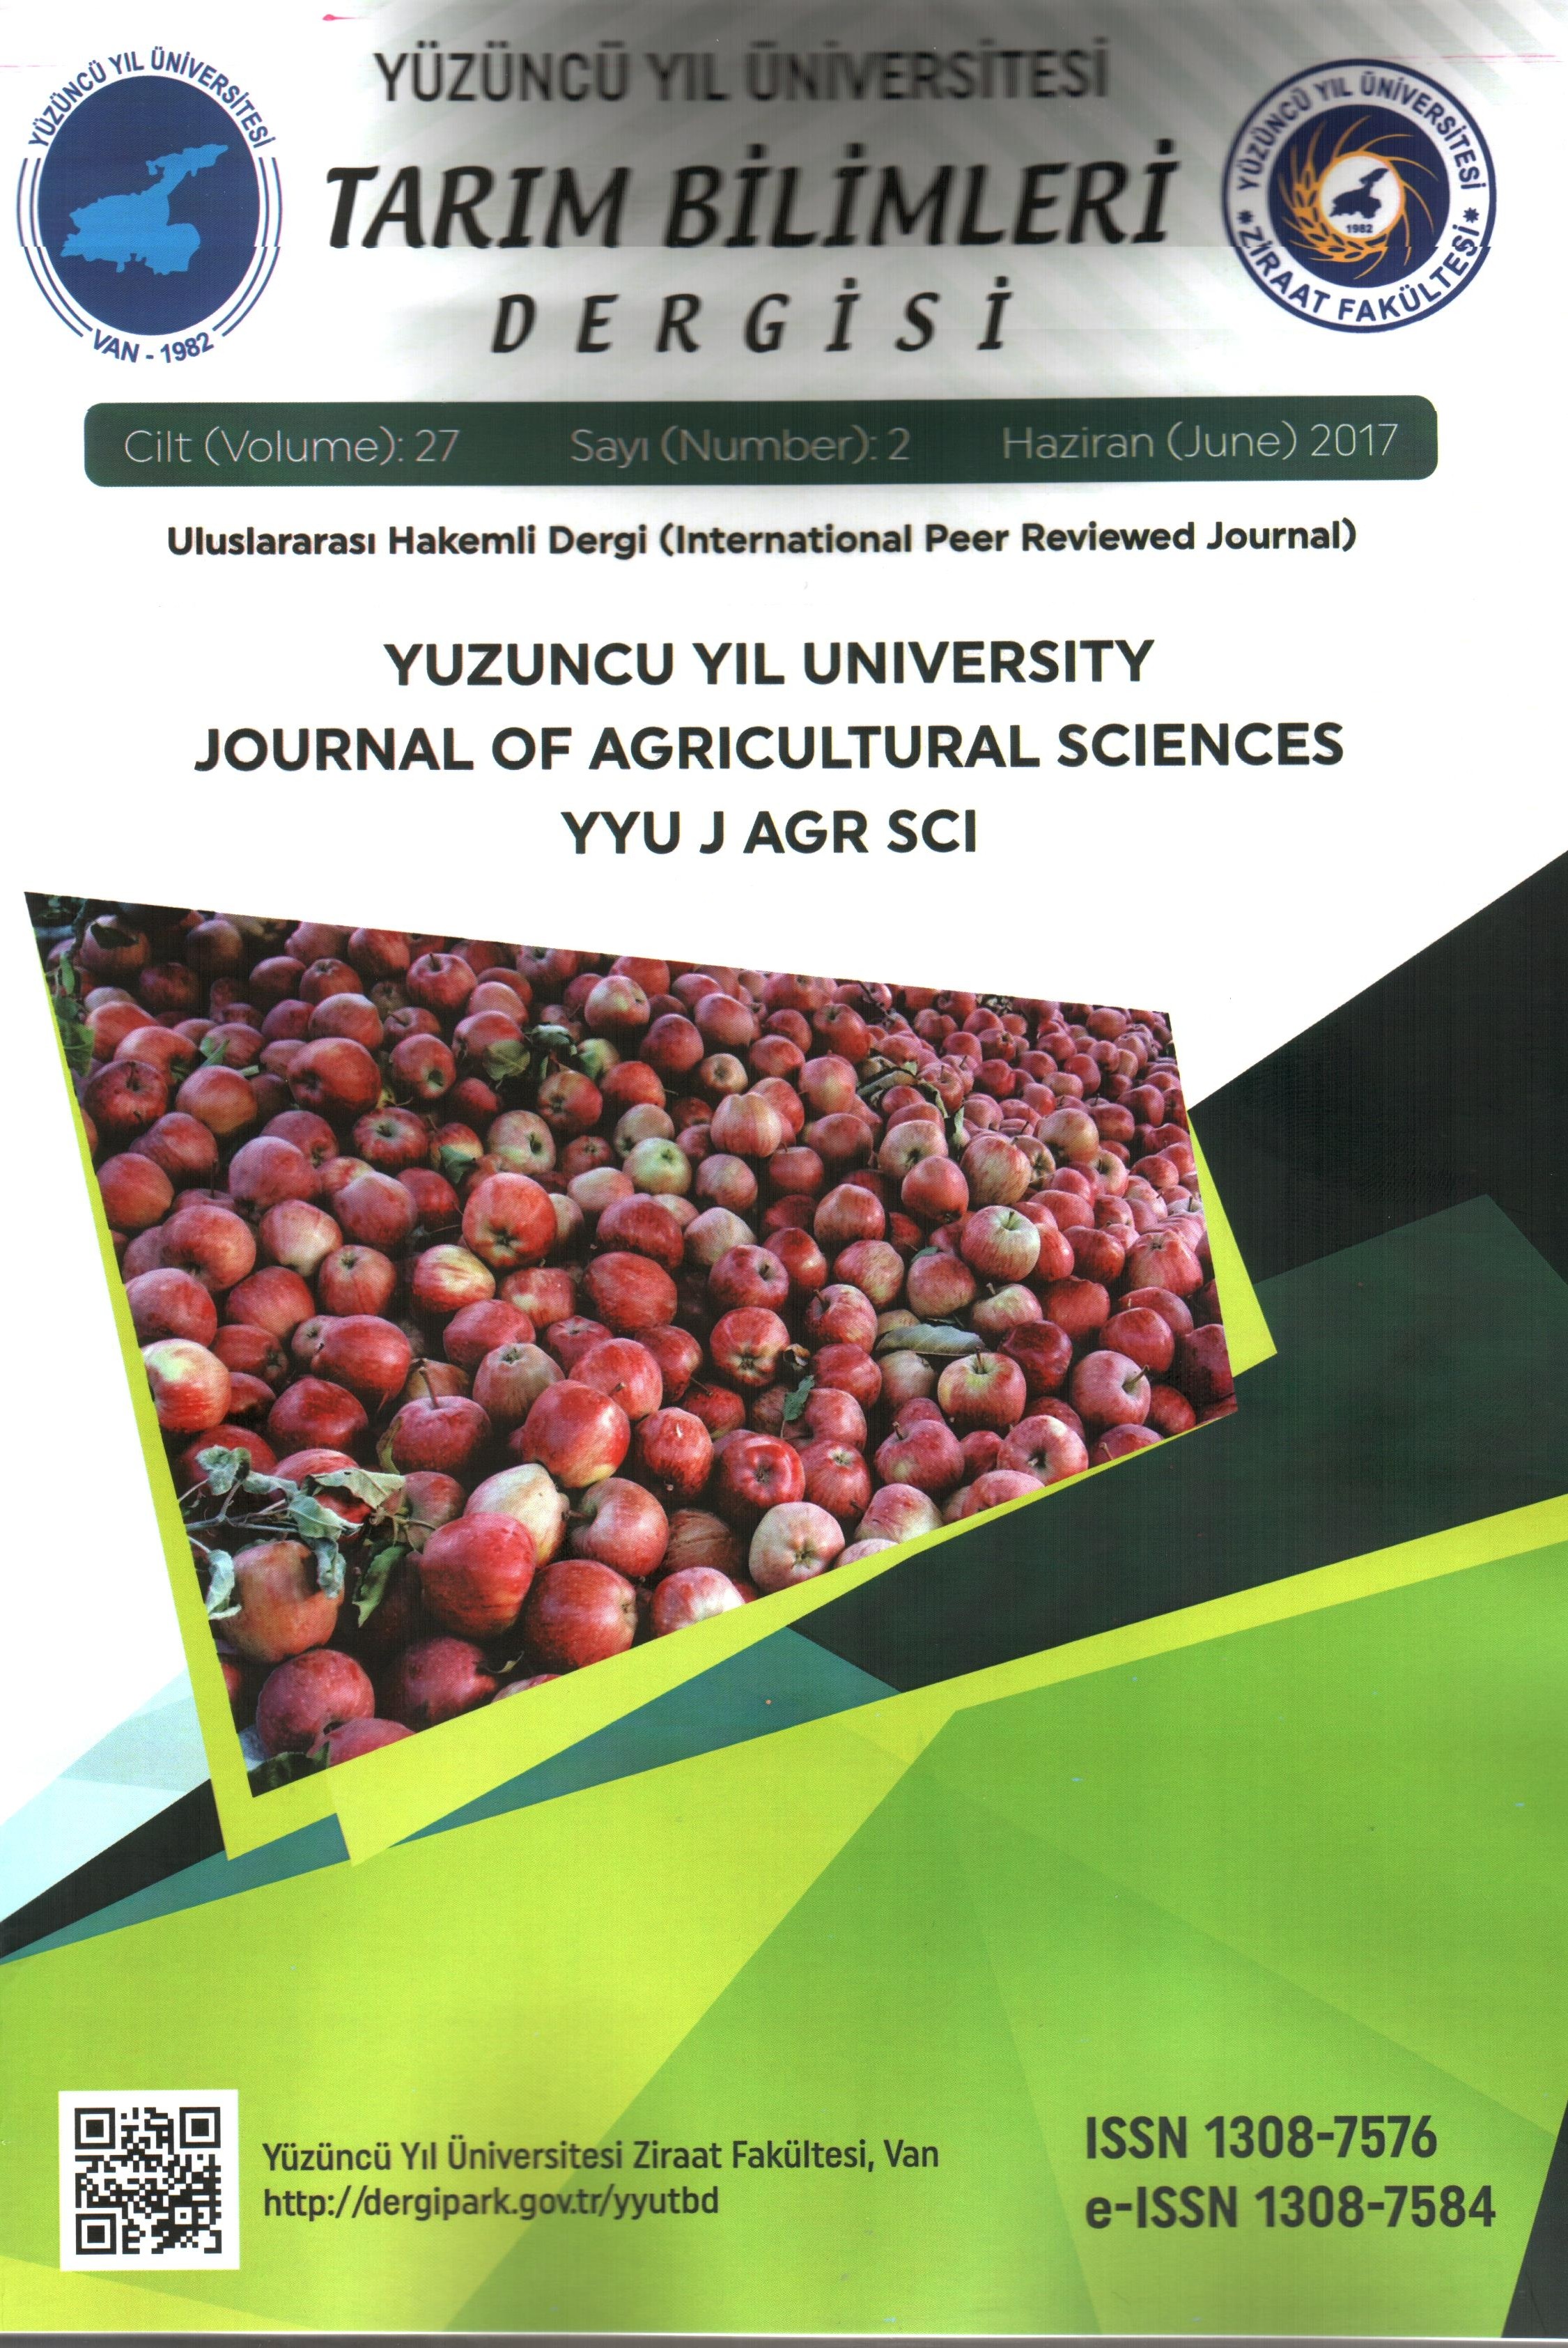 Yuzuncu Yıl University Journal of Agricultural Sciences